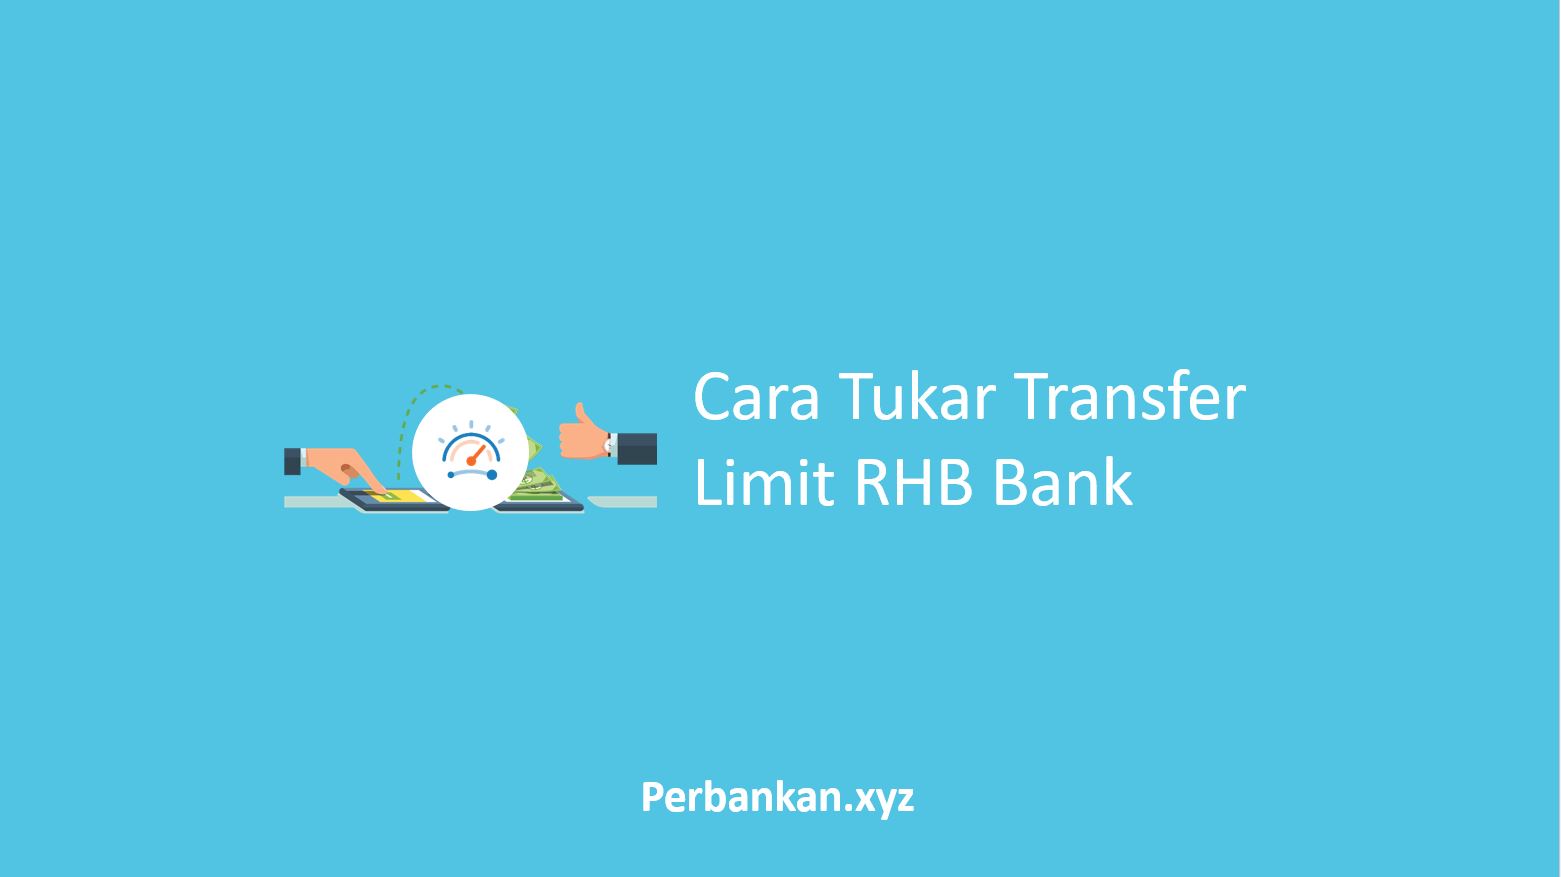 Cara Tukar Transfer Limit RHB Bank